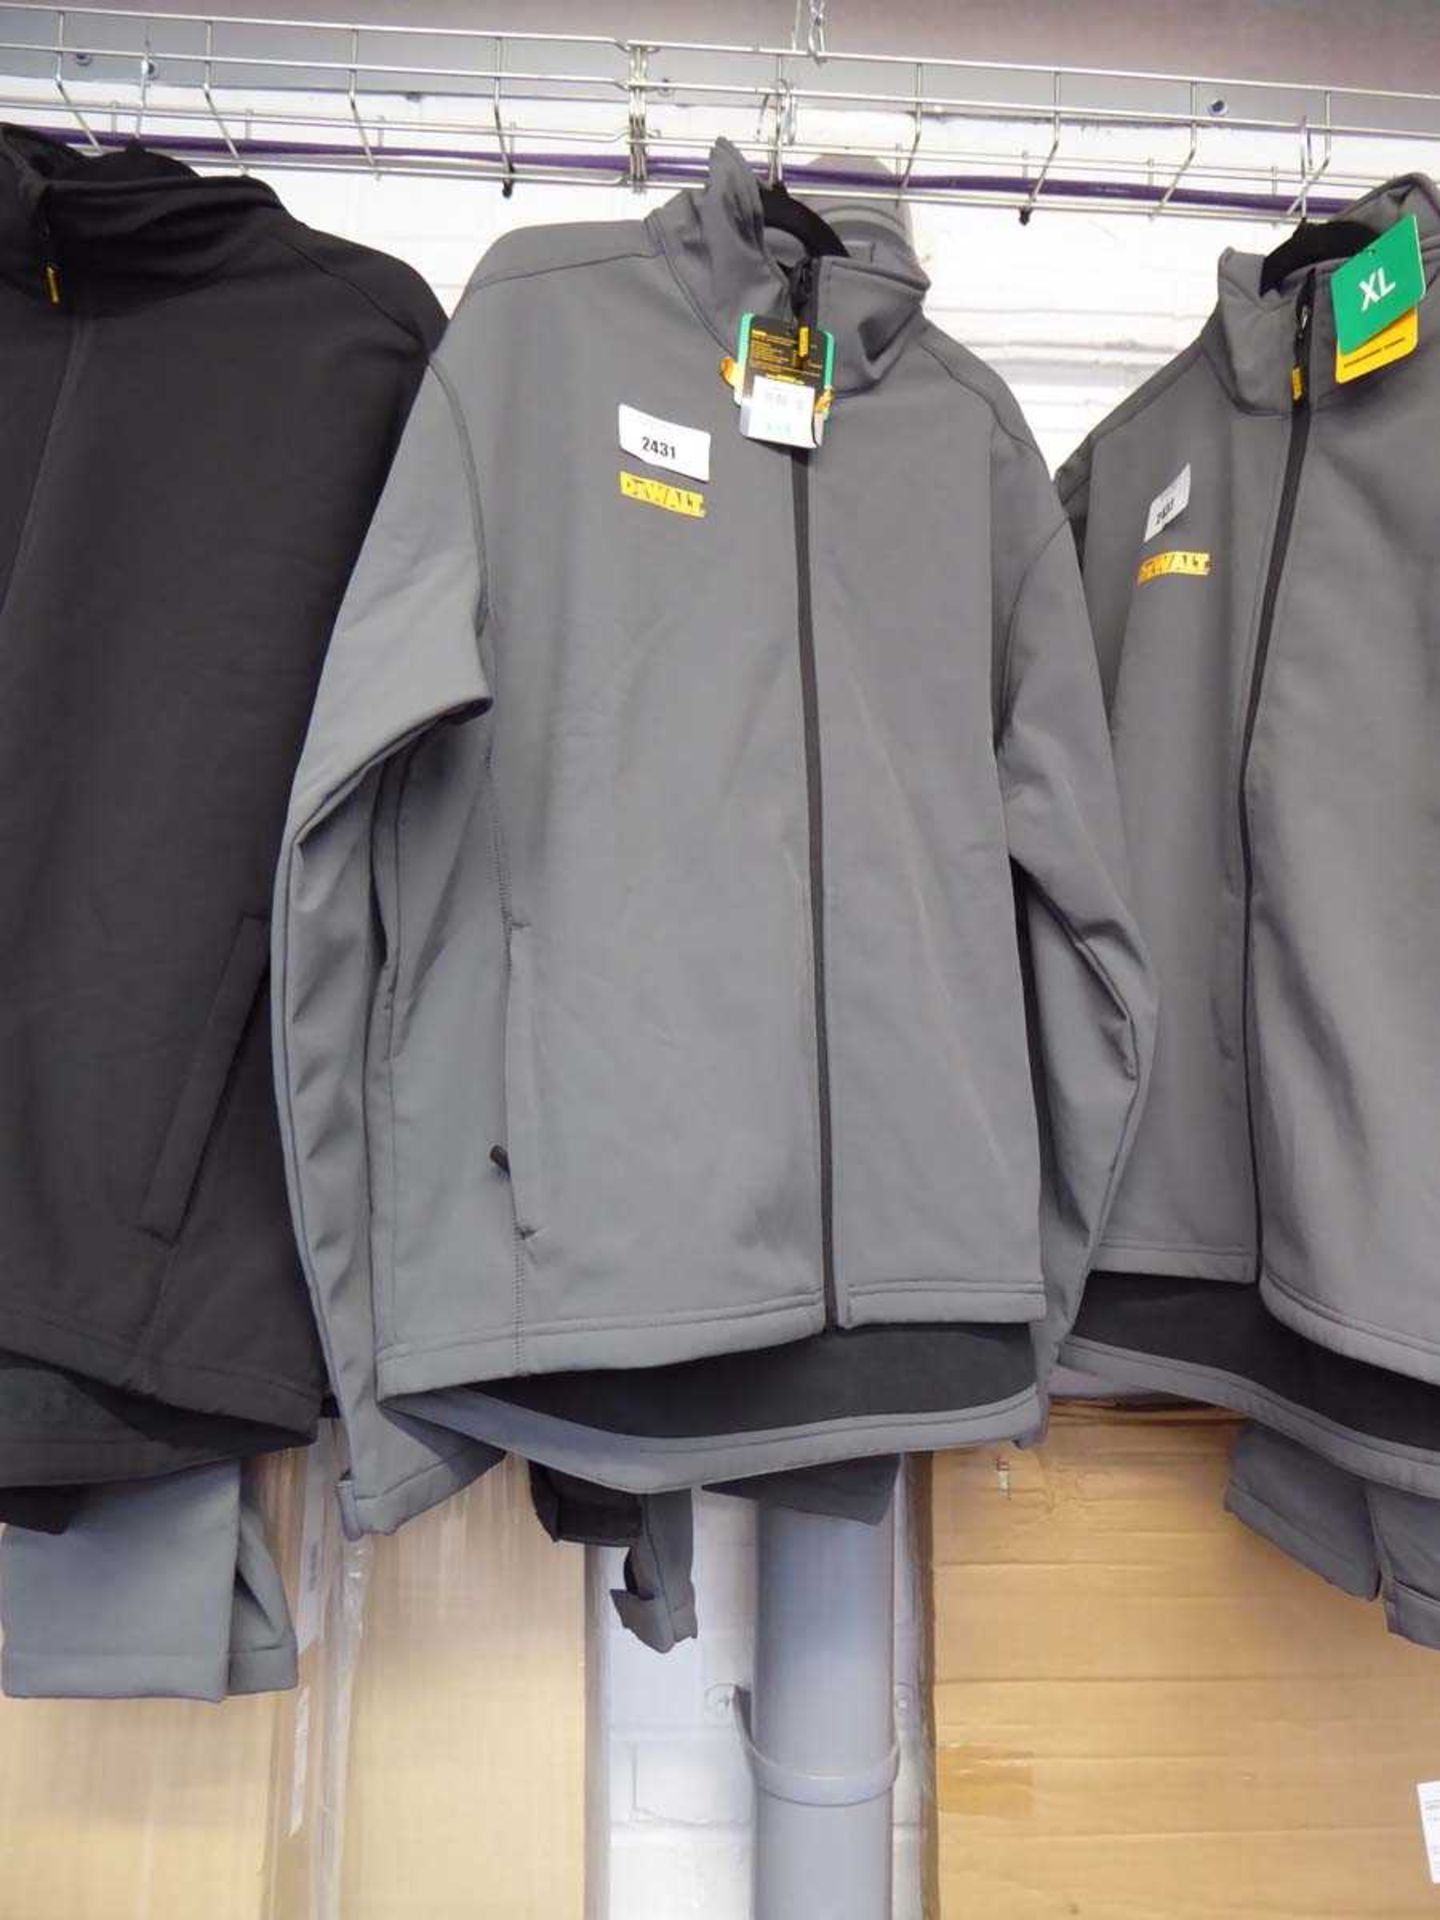 +VAT 2 DeWalt full zip waterproof work jackets in grey (size XL)